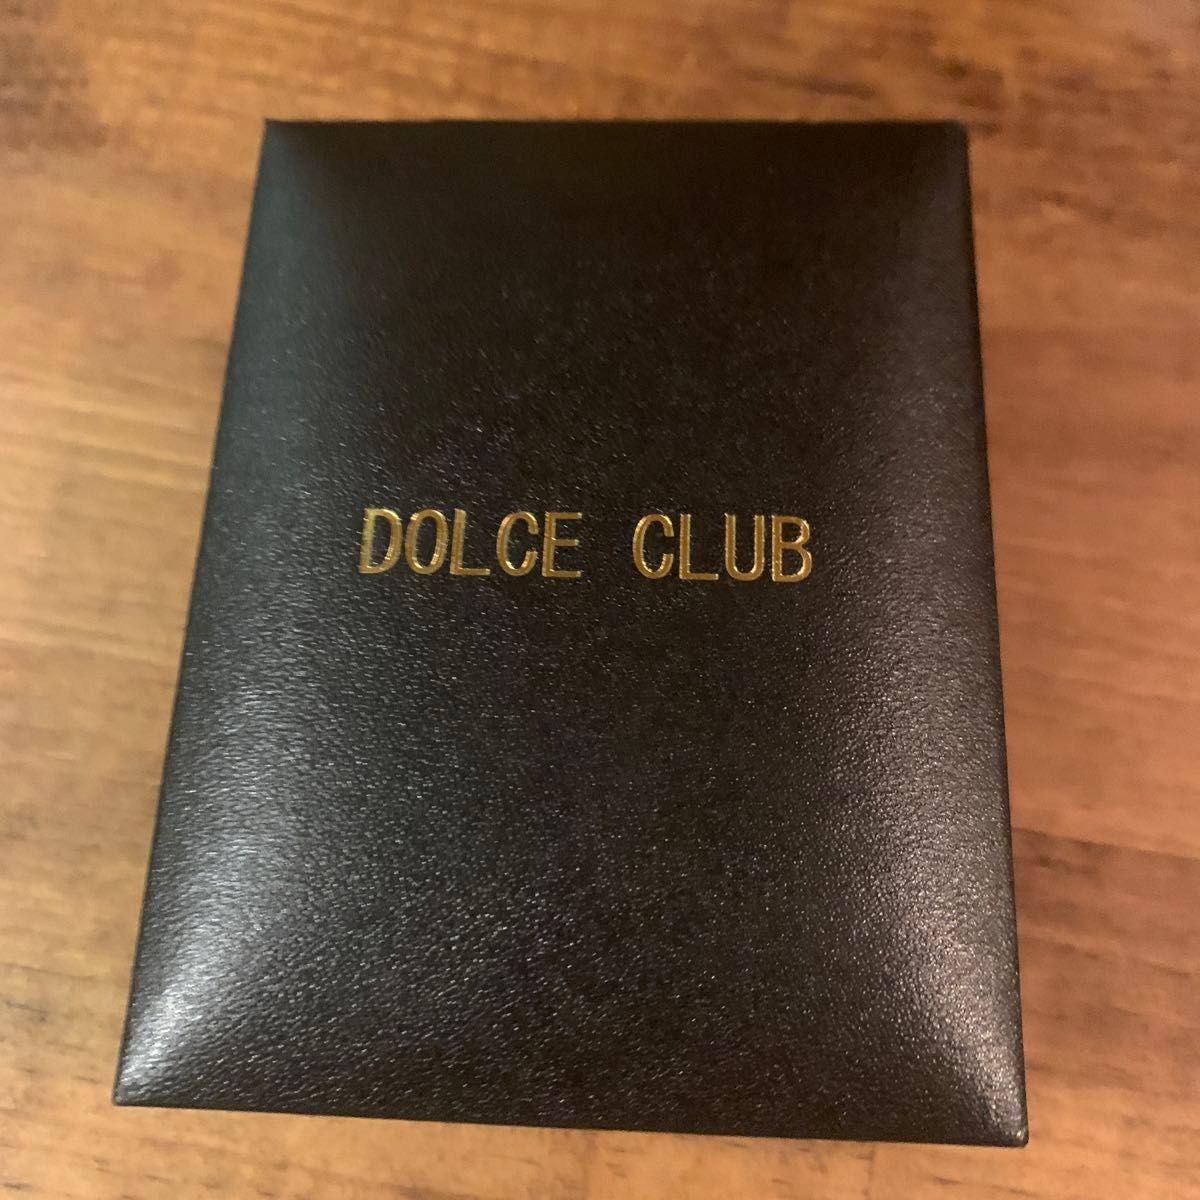 DOLCE CLUB メンズ腕時計